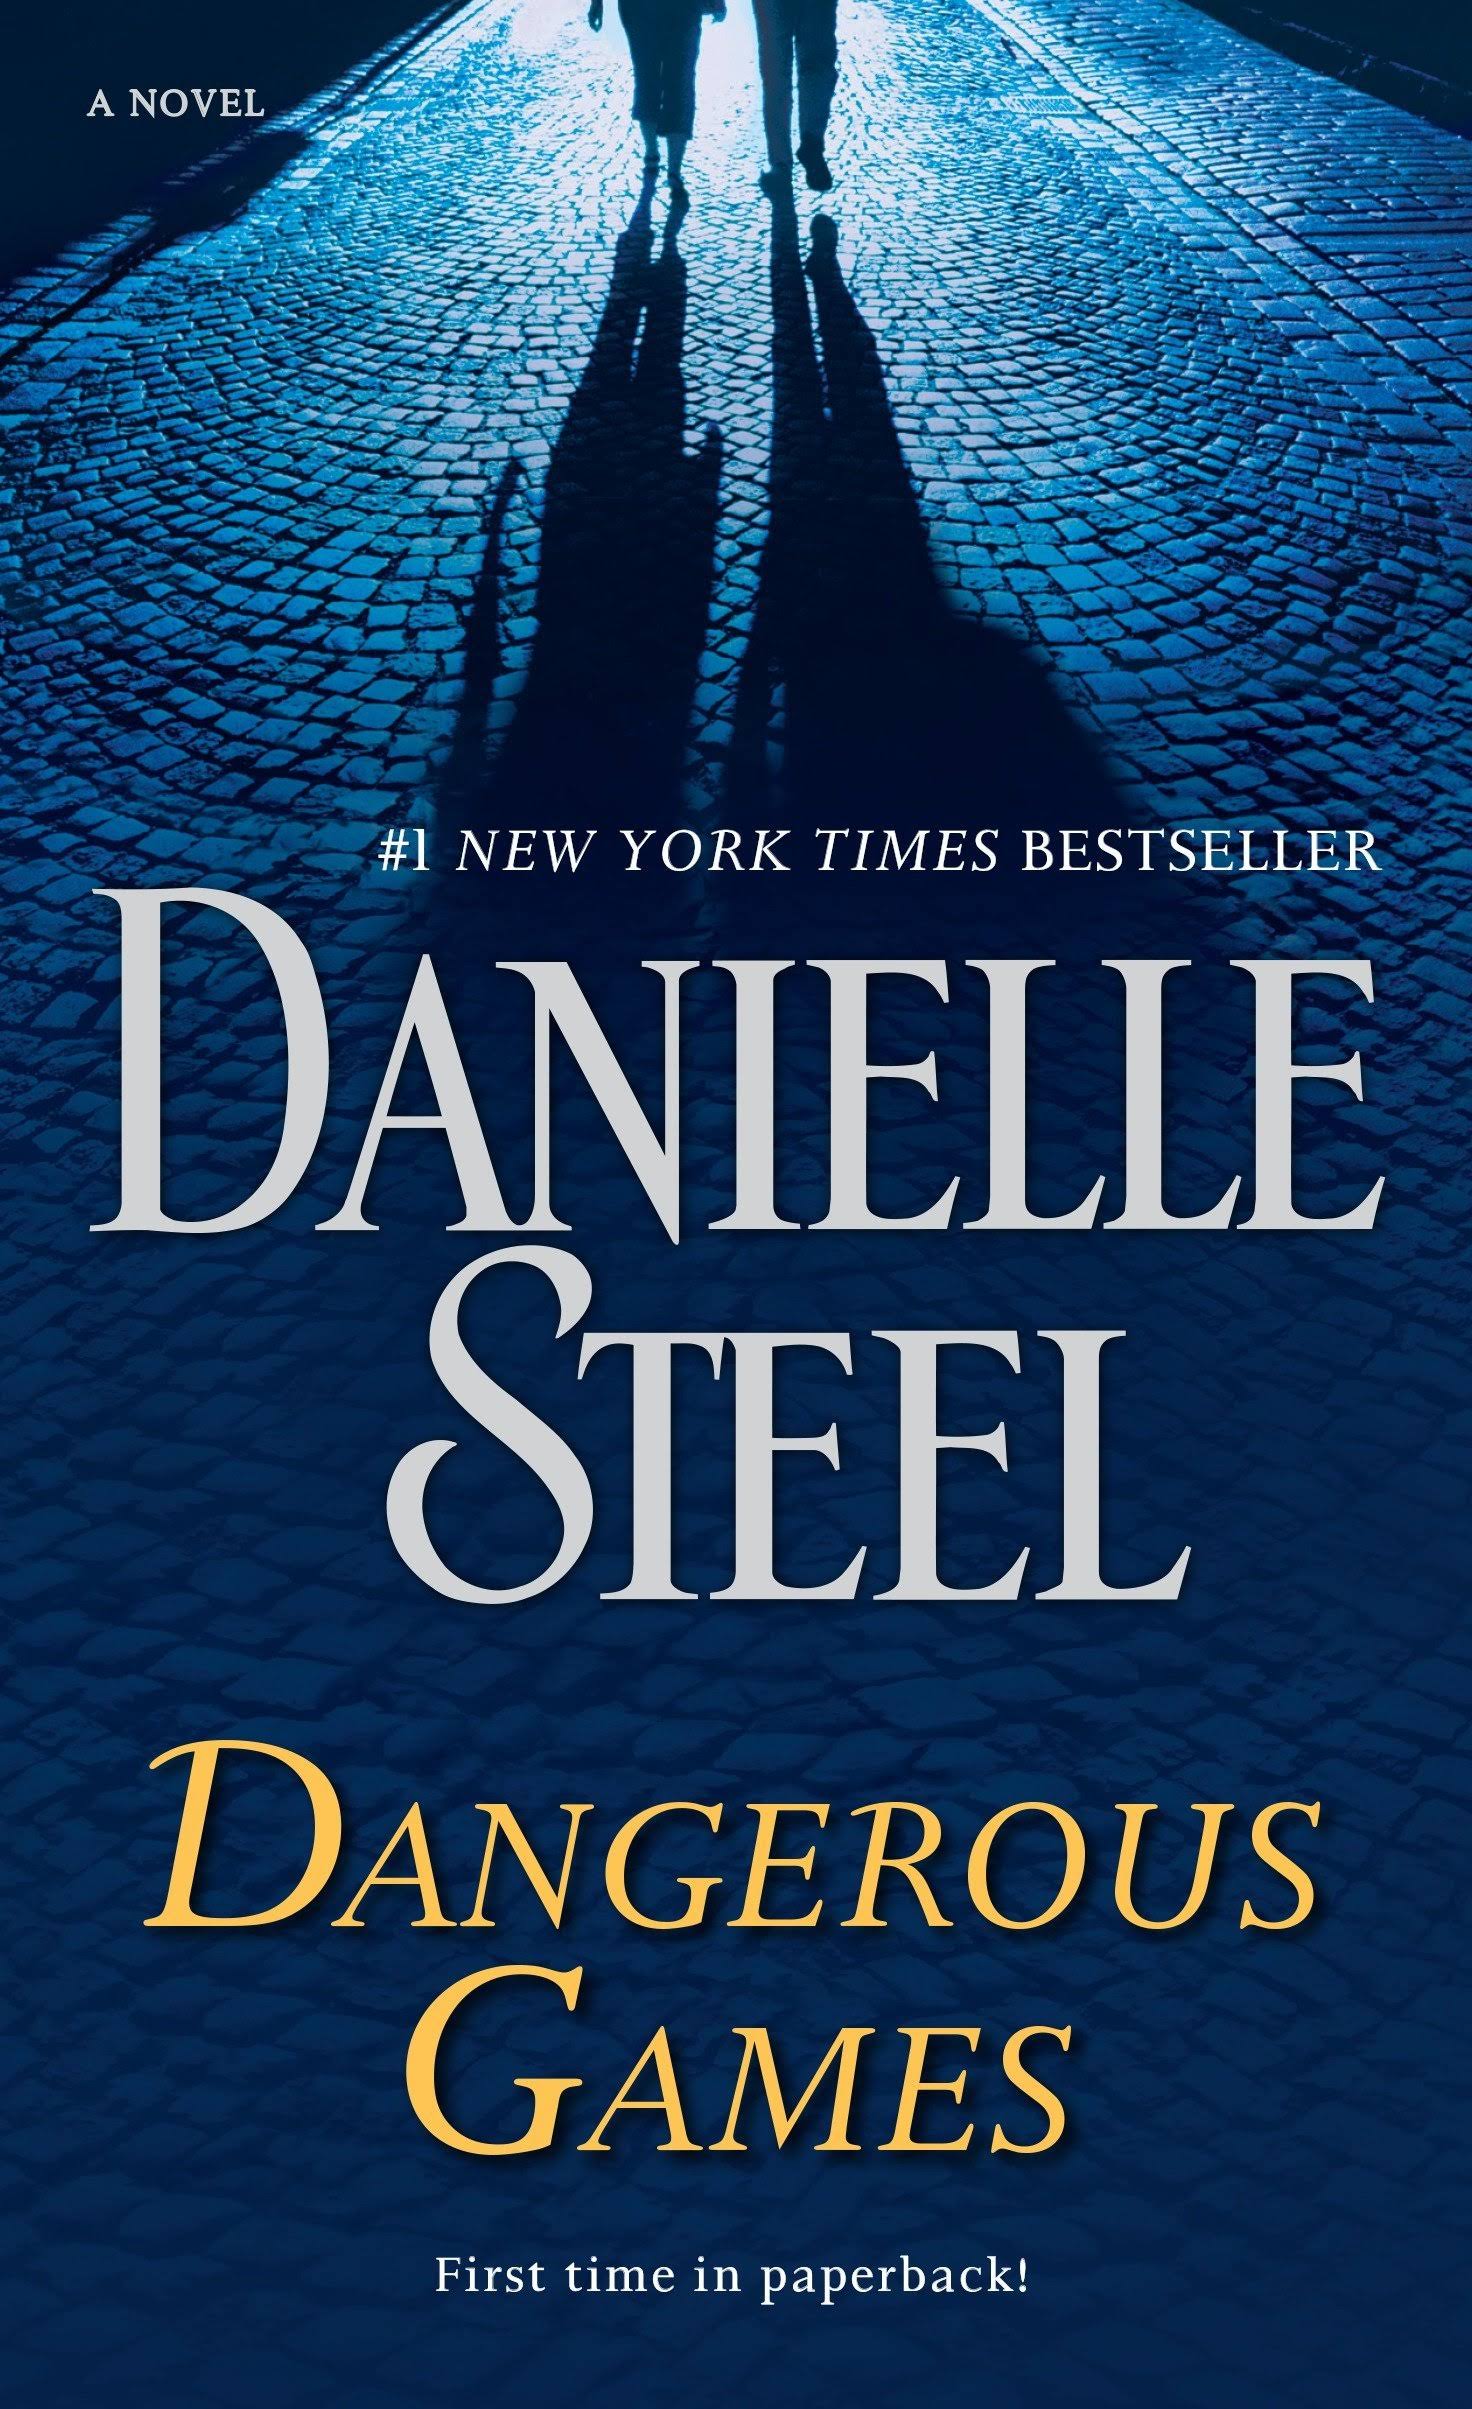 Dangerous Games: A Novel - Danielle Steel